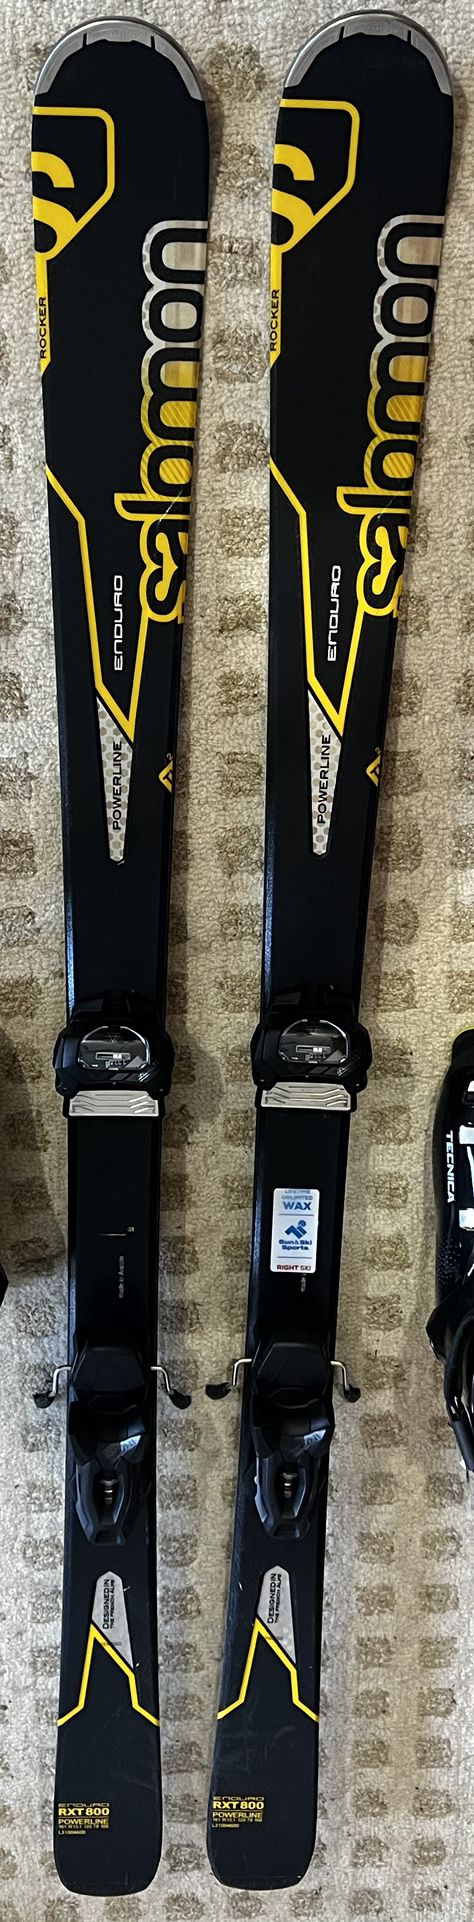 Men’s Salomon Enduro RXT 800 Skis w/ Tyrolia Attack 11 Bindings - 161 cm